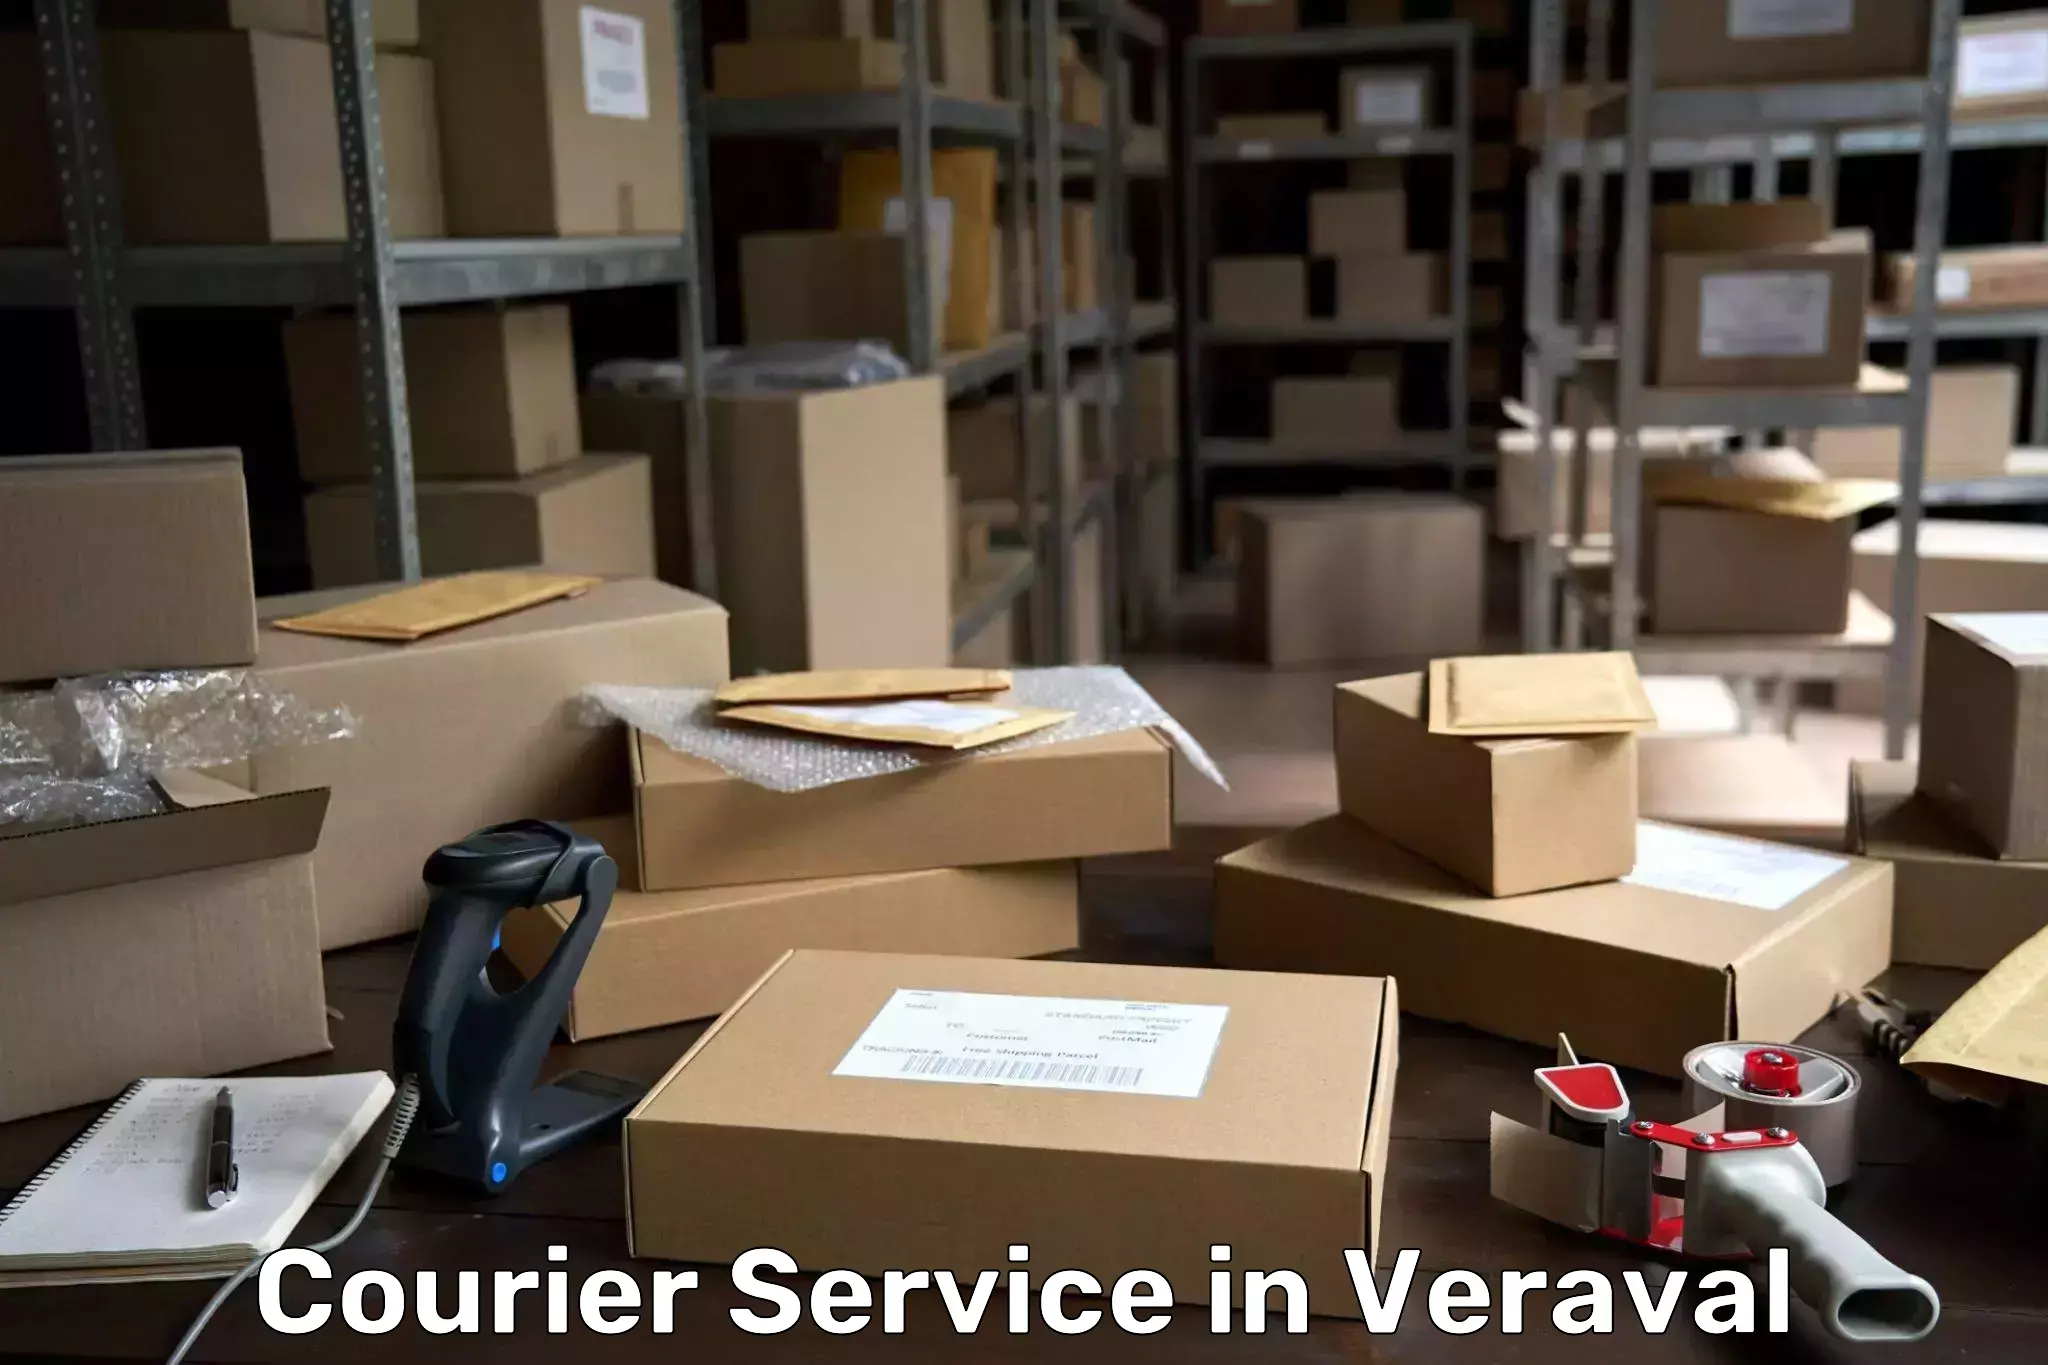 Urgent courier needs in Veraval